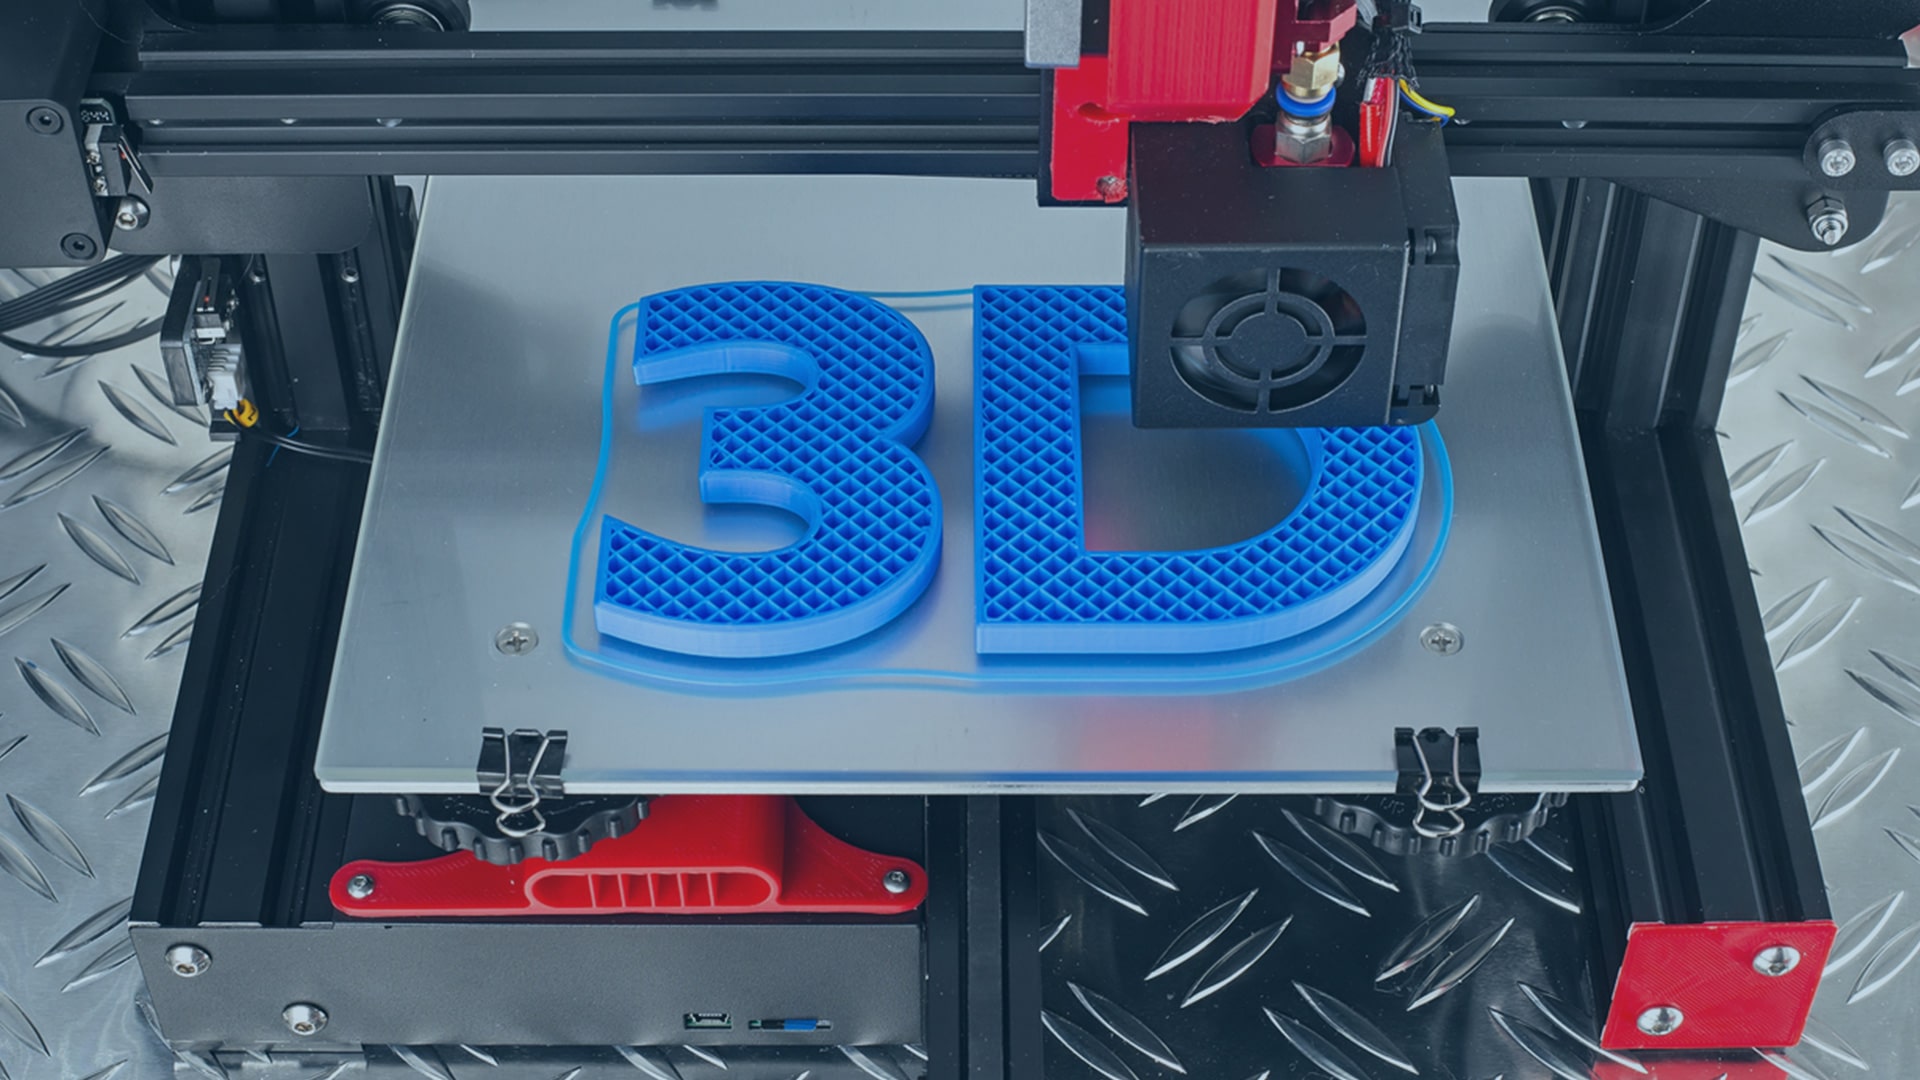 Best 3D Printer under 200 - Beginners Guide in 2020 - ULTRAdvice.com